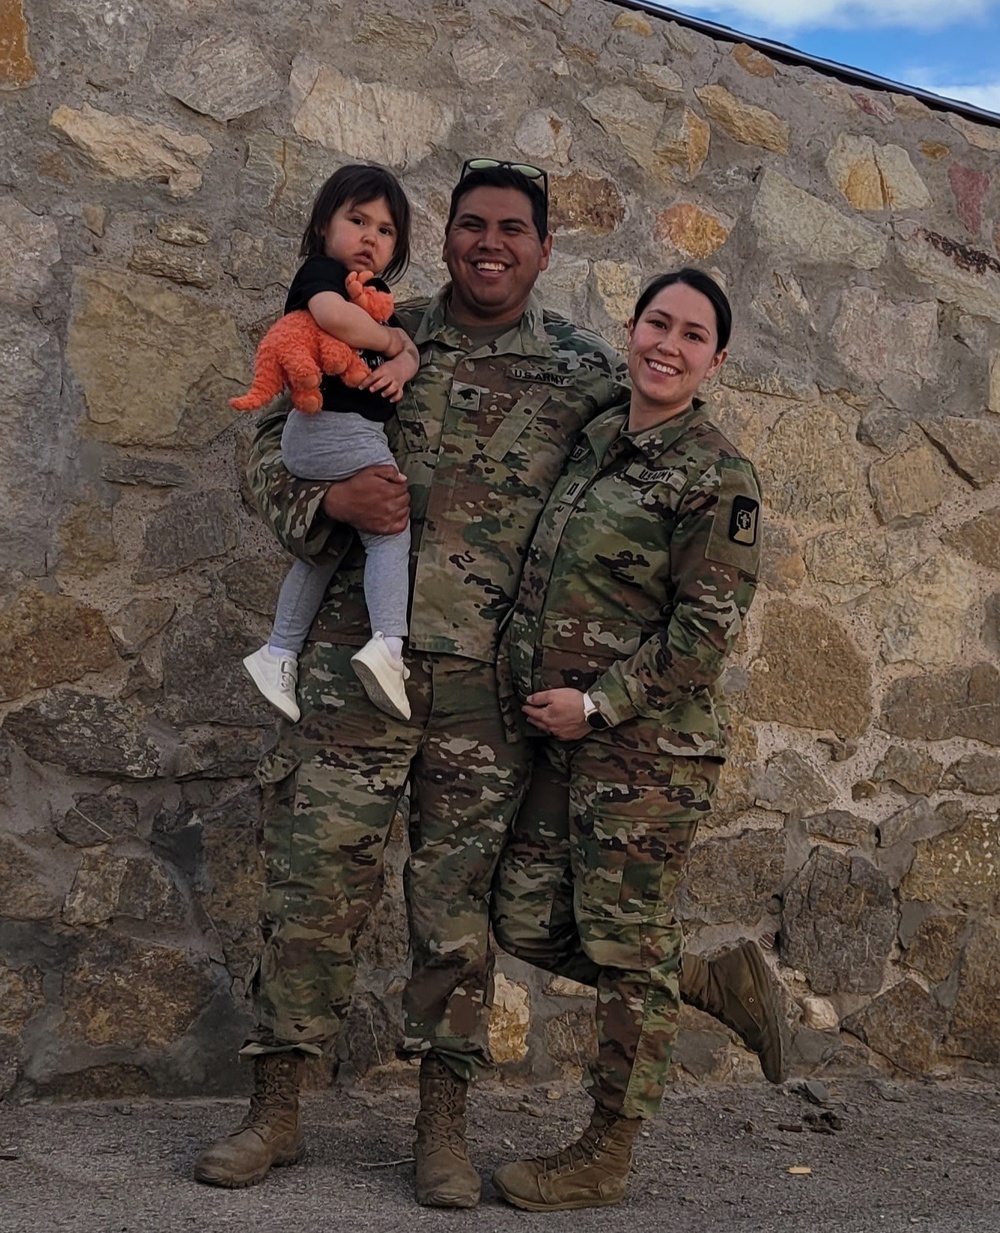 A Soldier’s sacrifice inspires a local military nurse